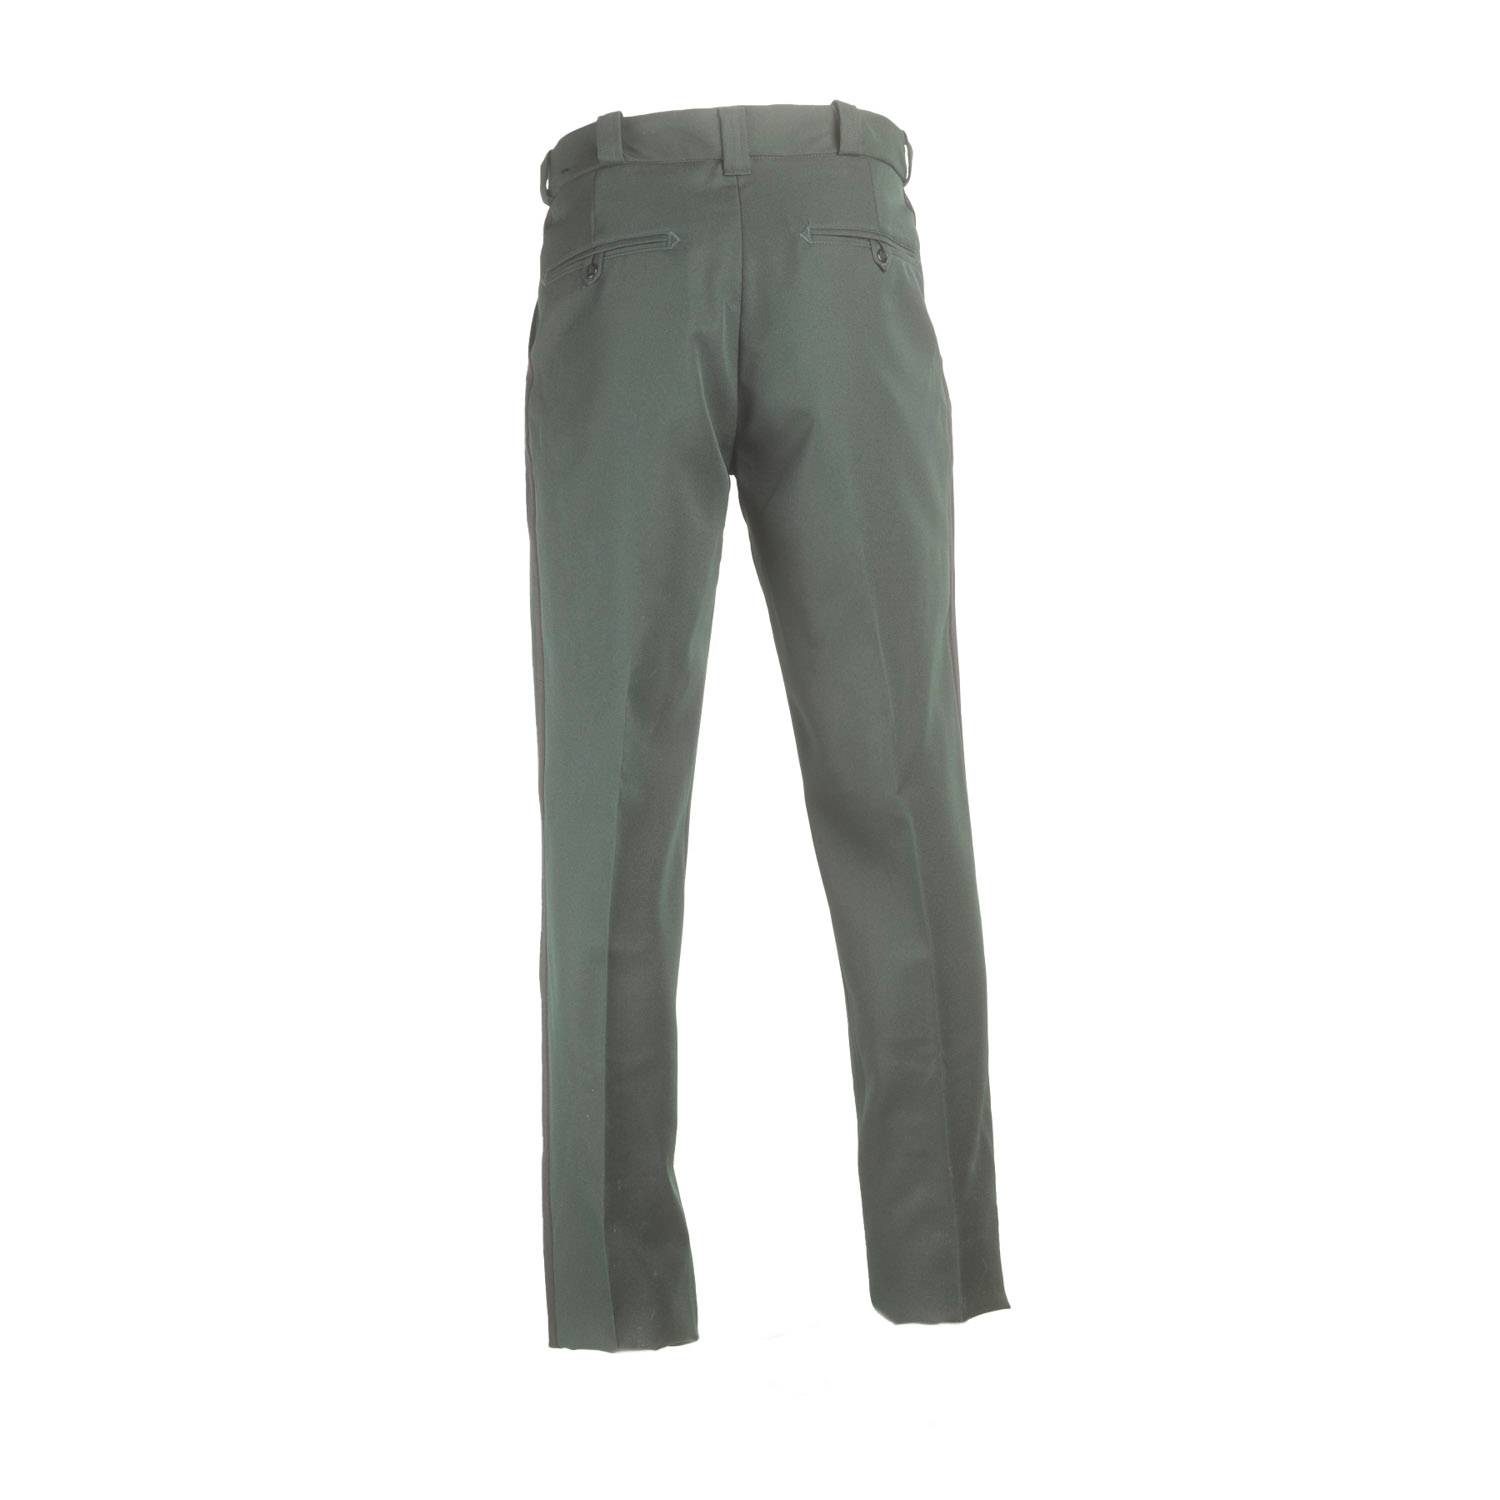 Elbeco Men's Spruce Green TexTrop2 Uniform Pants w/ Black St